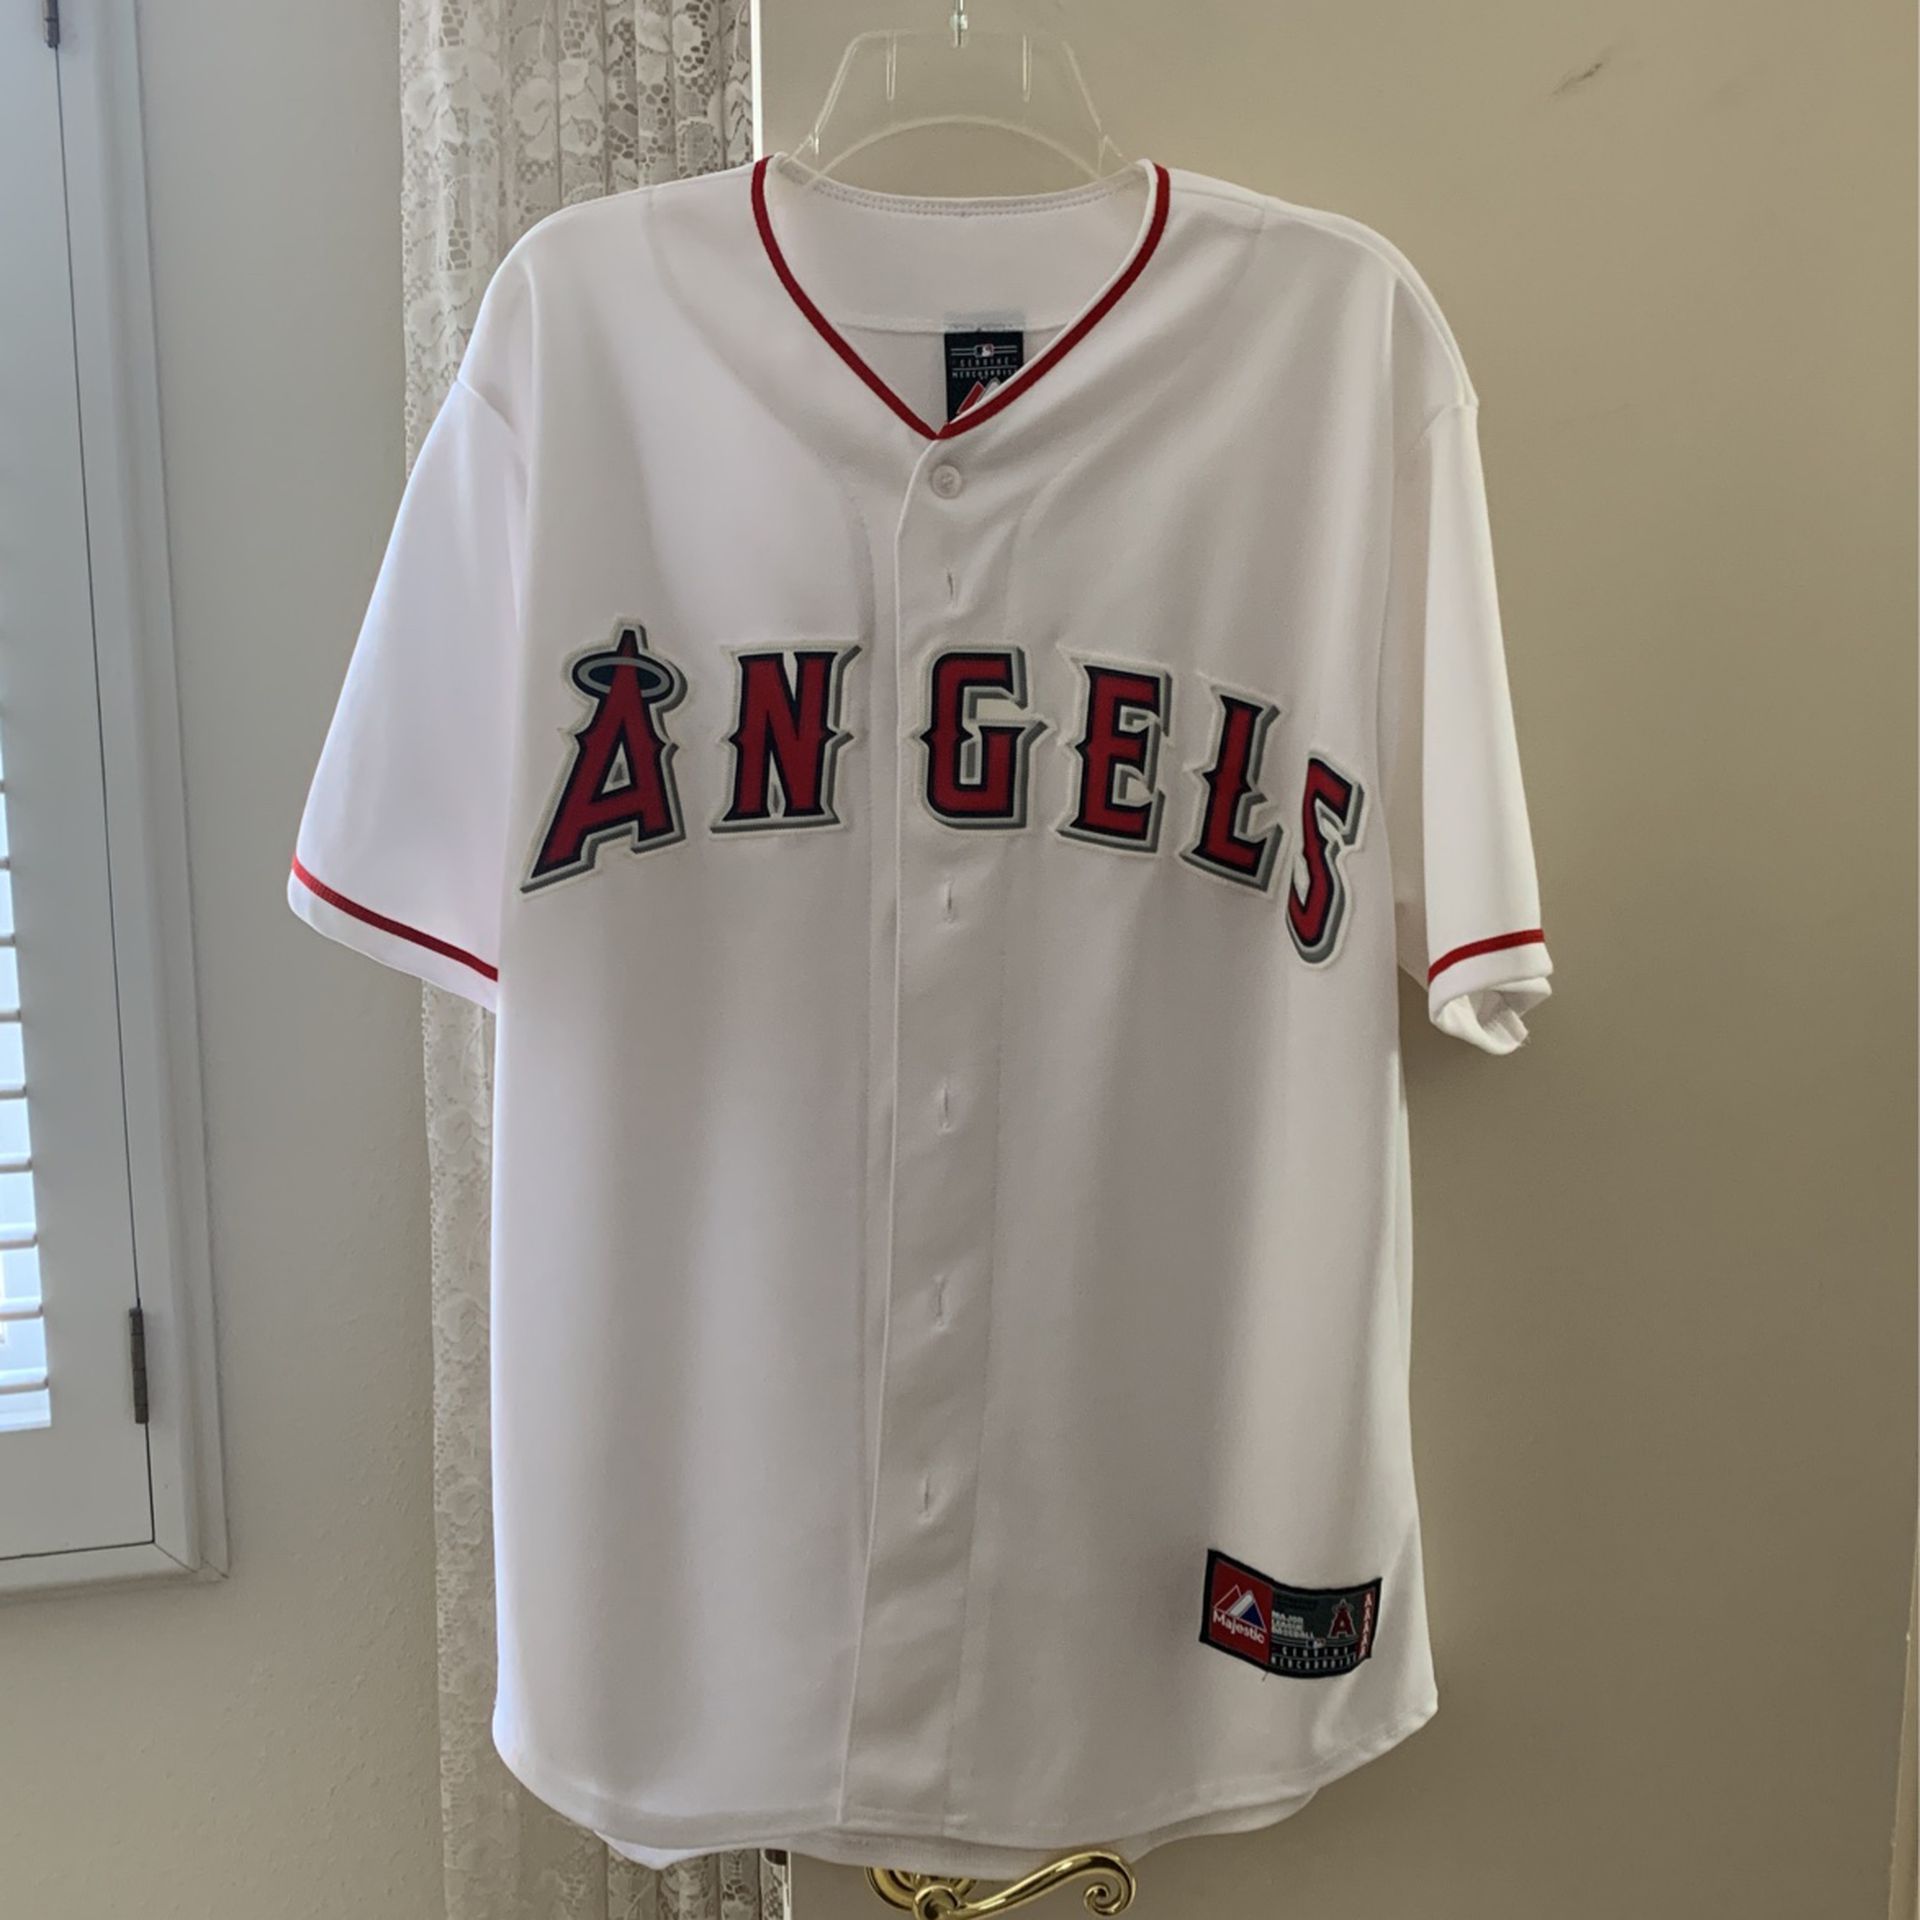 Angels Jersey Size Large - Angels Baseball Uniform Majestic MLB EUC!! - PRICE: $25